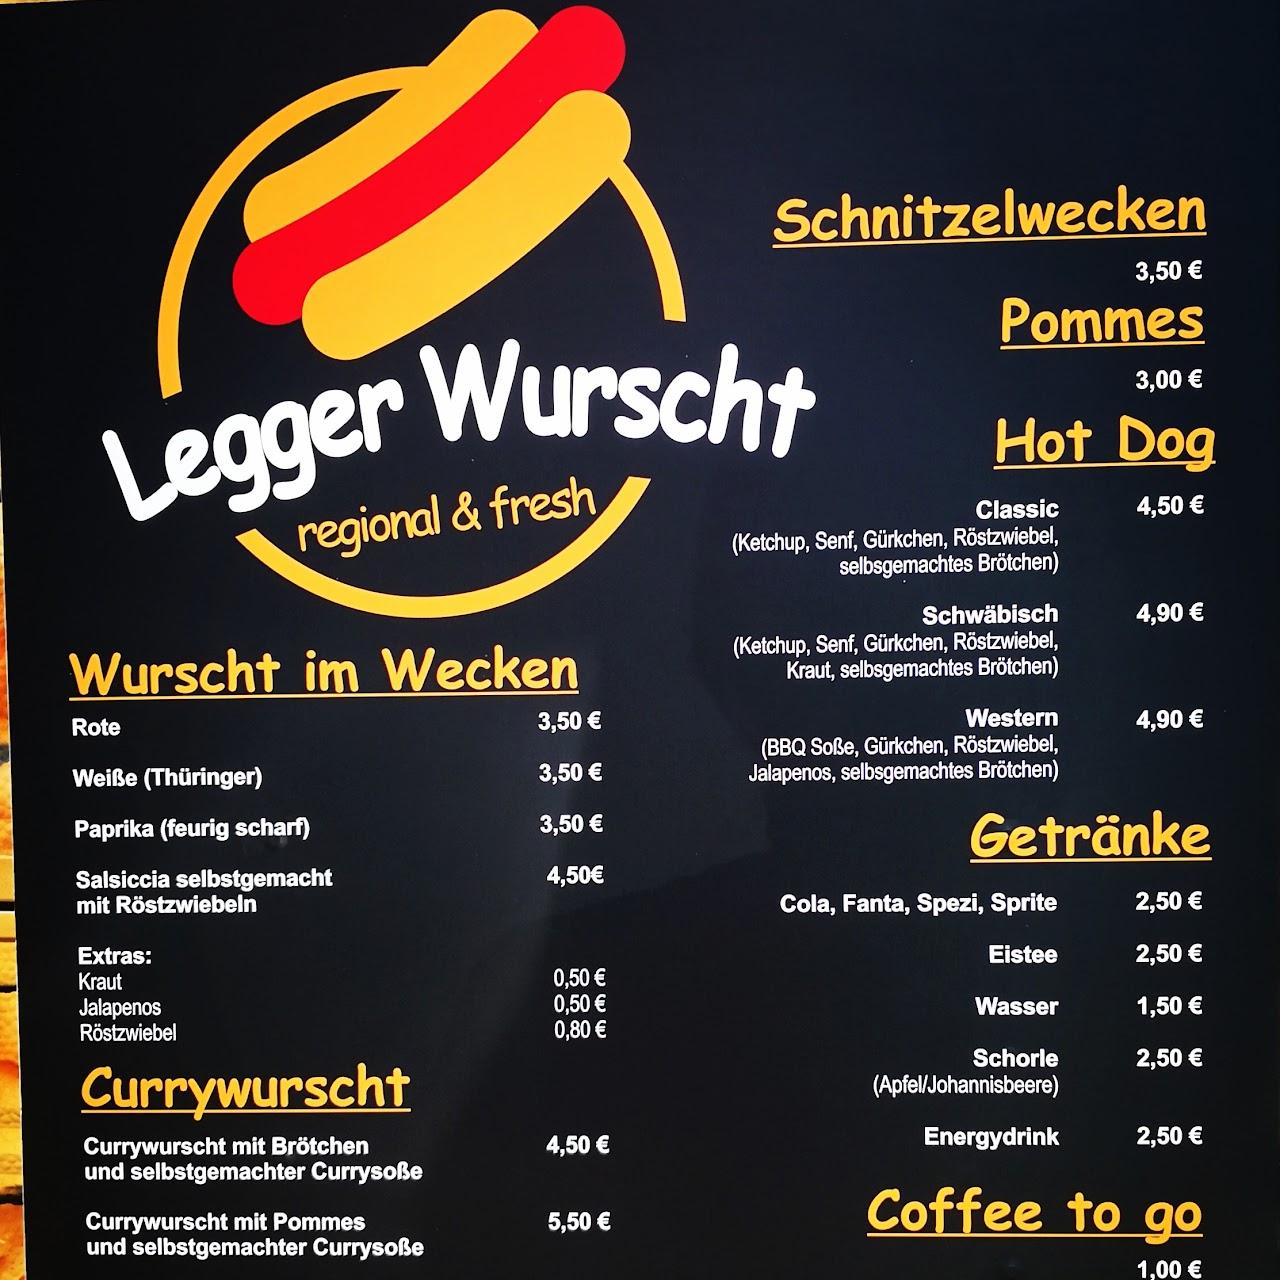 Restaurant "LeggerWurscht" in Steinheim am Albuch